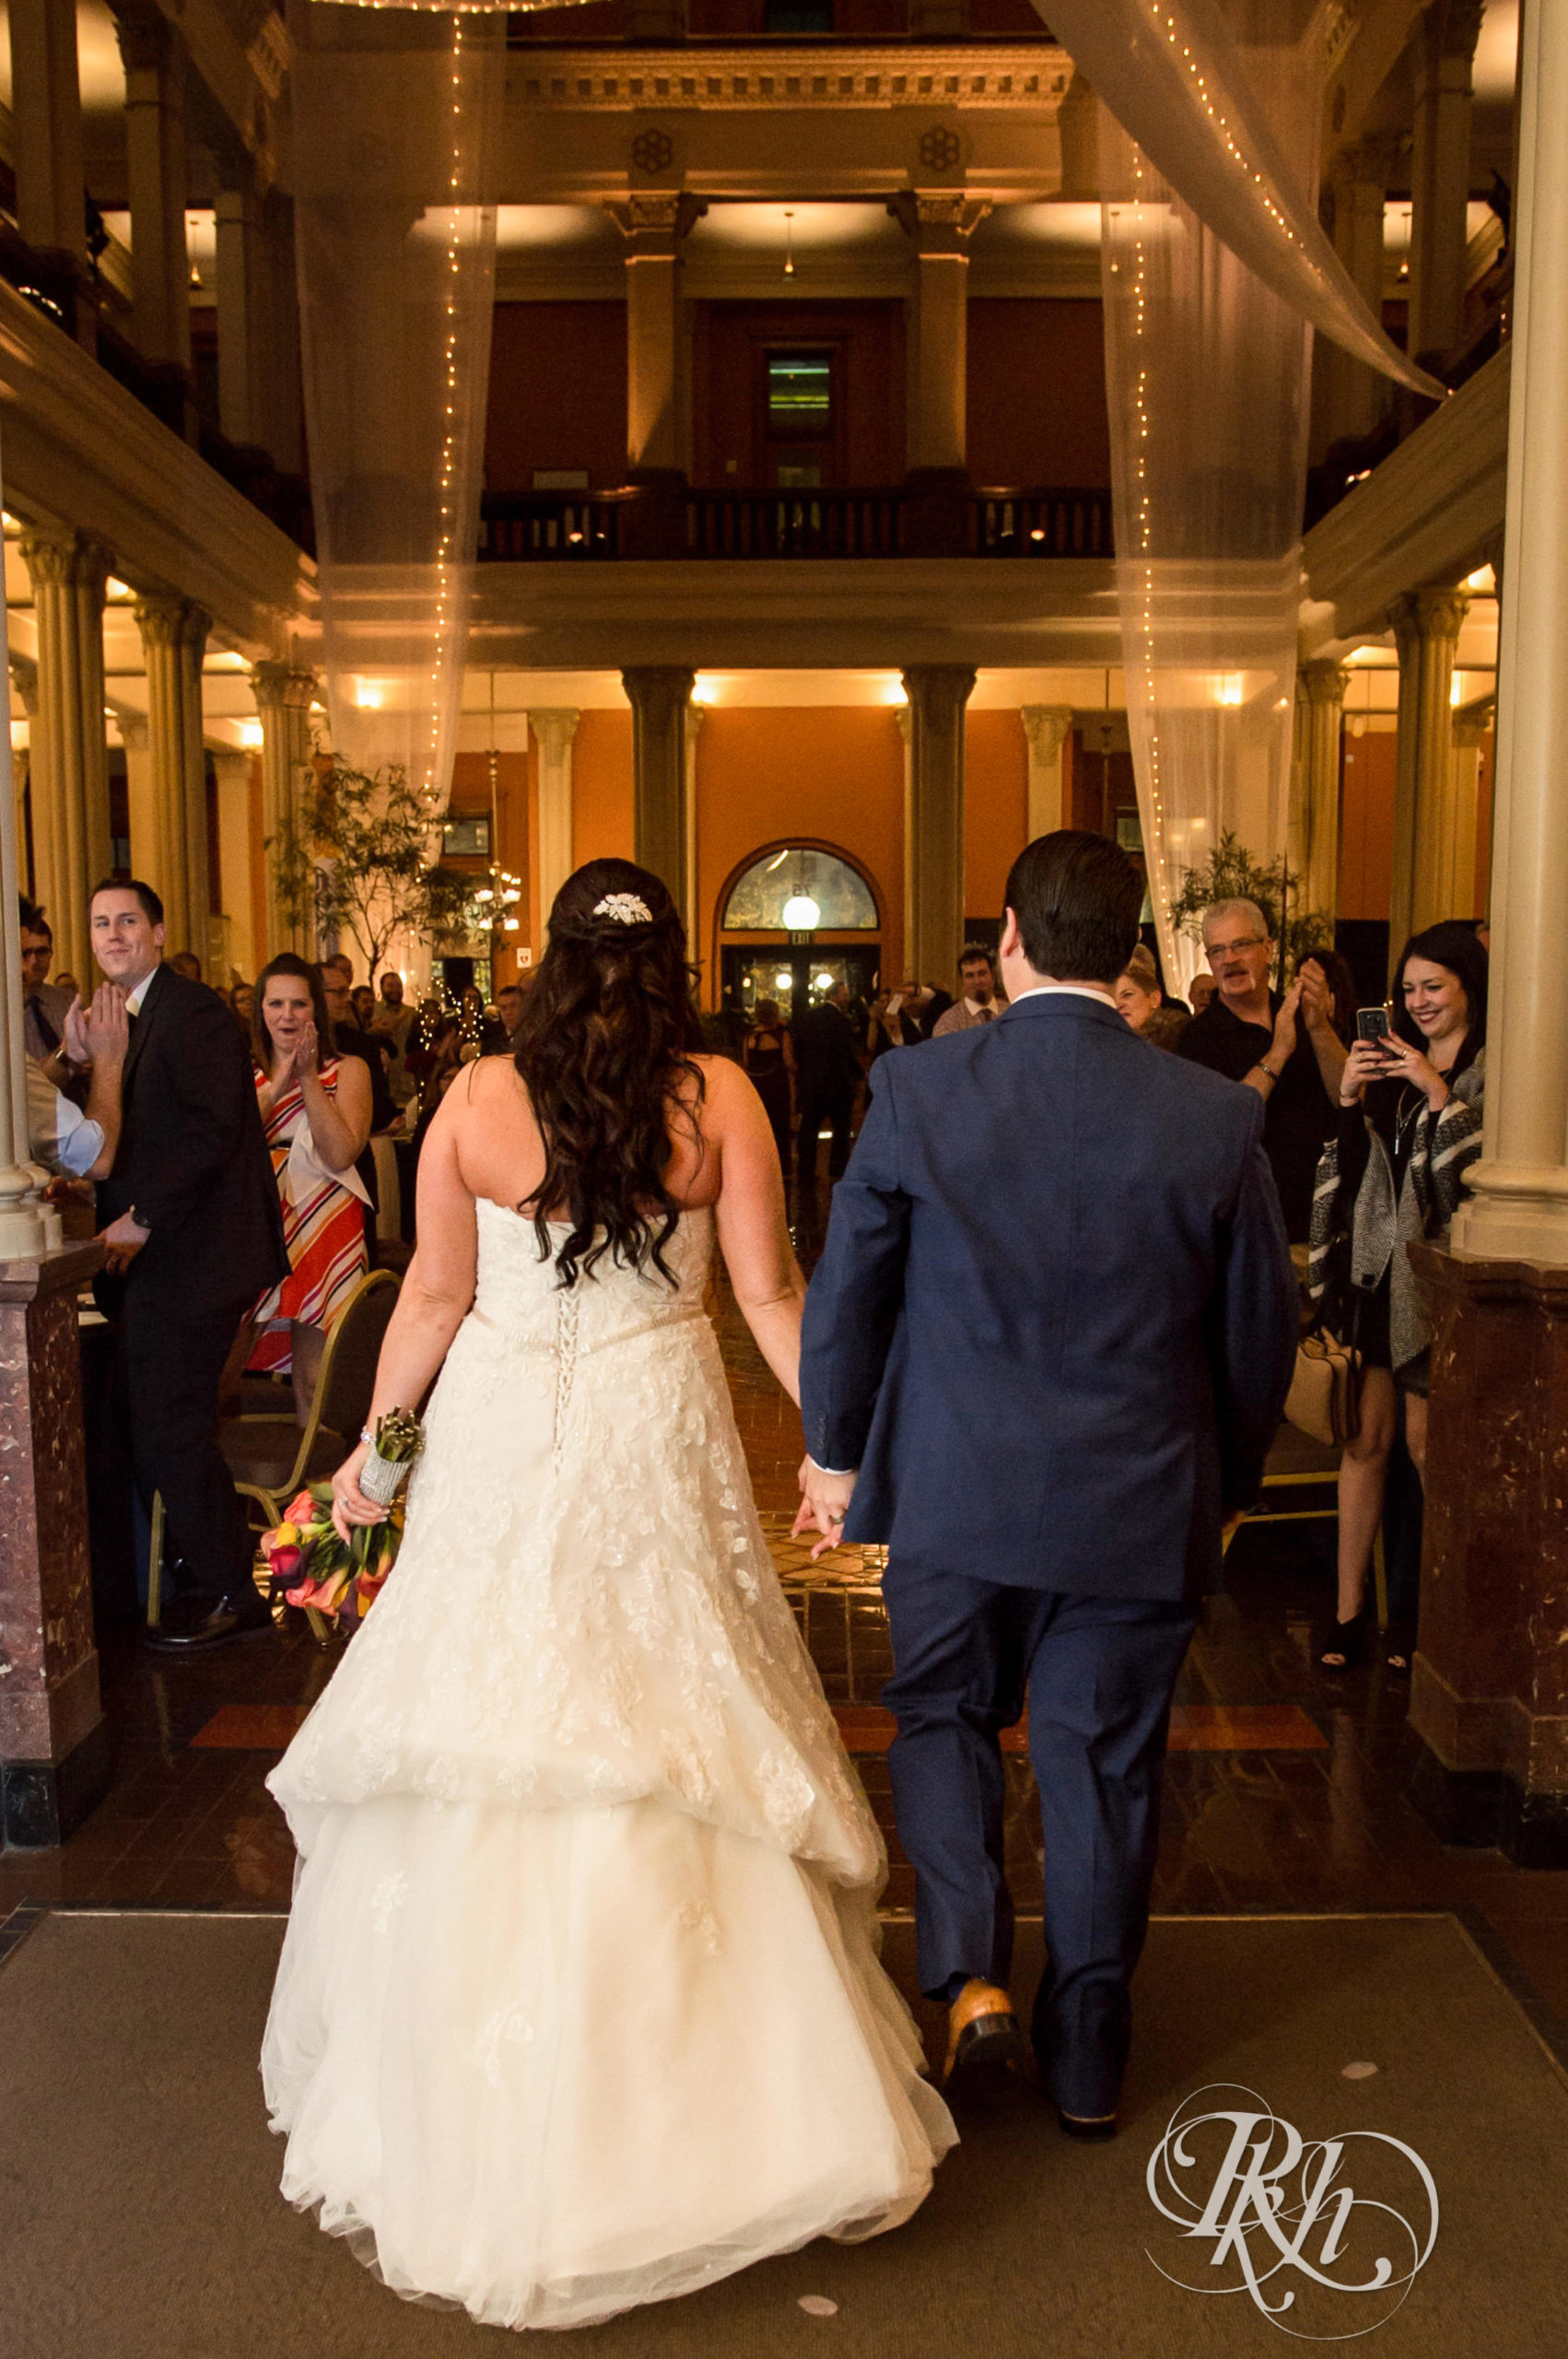 Bride and groom enter wedding reception on wedding day at Landmark Center in Saint Paul, Minnesota.